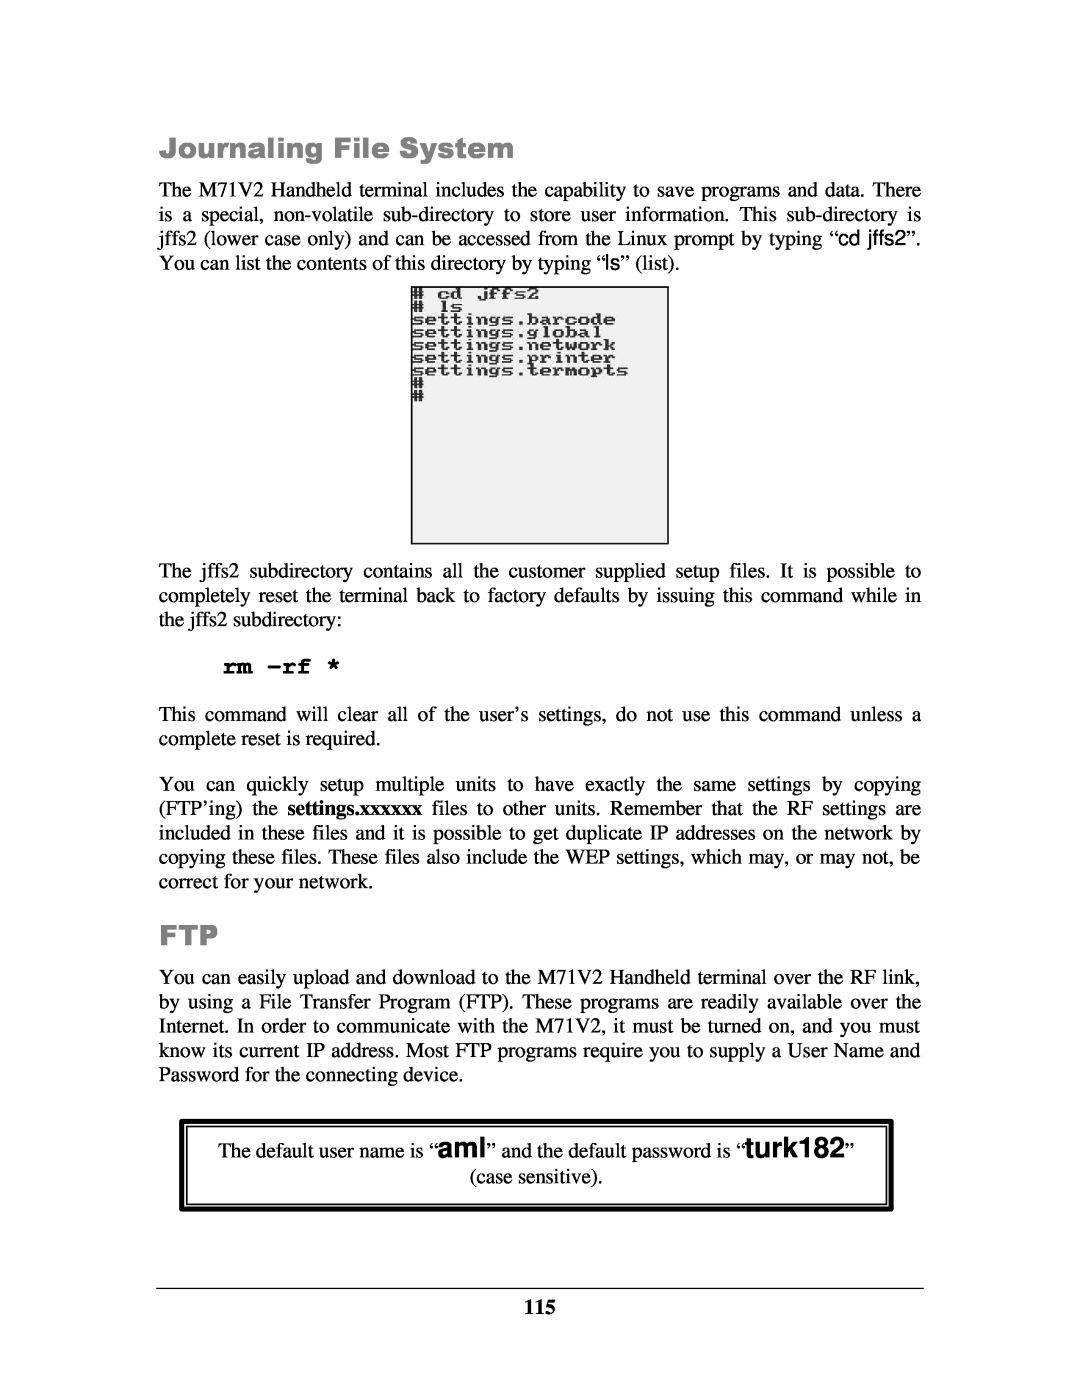 IBM M71V2 manual Journaling File System, rm -rf 